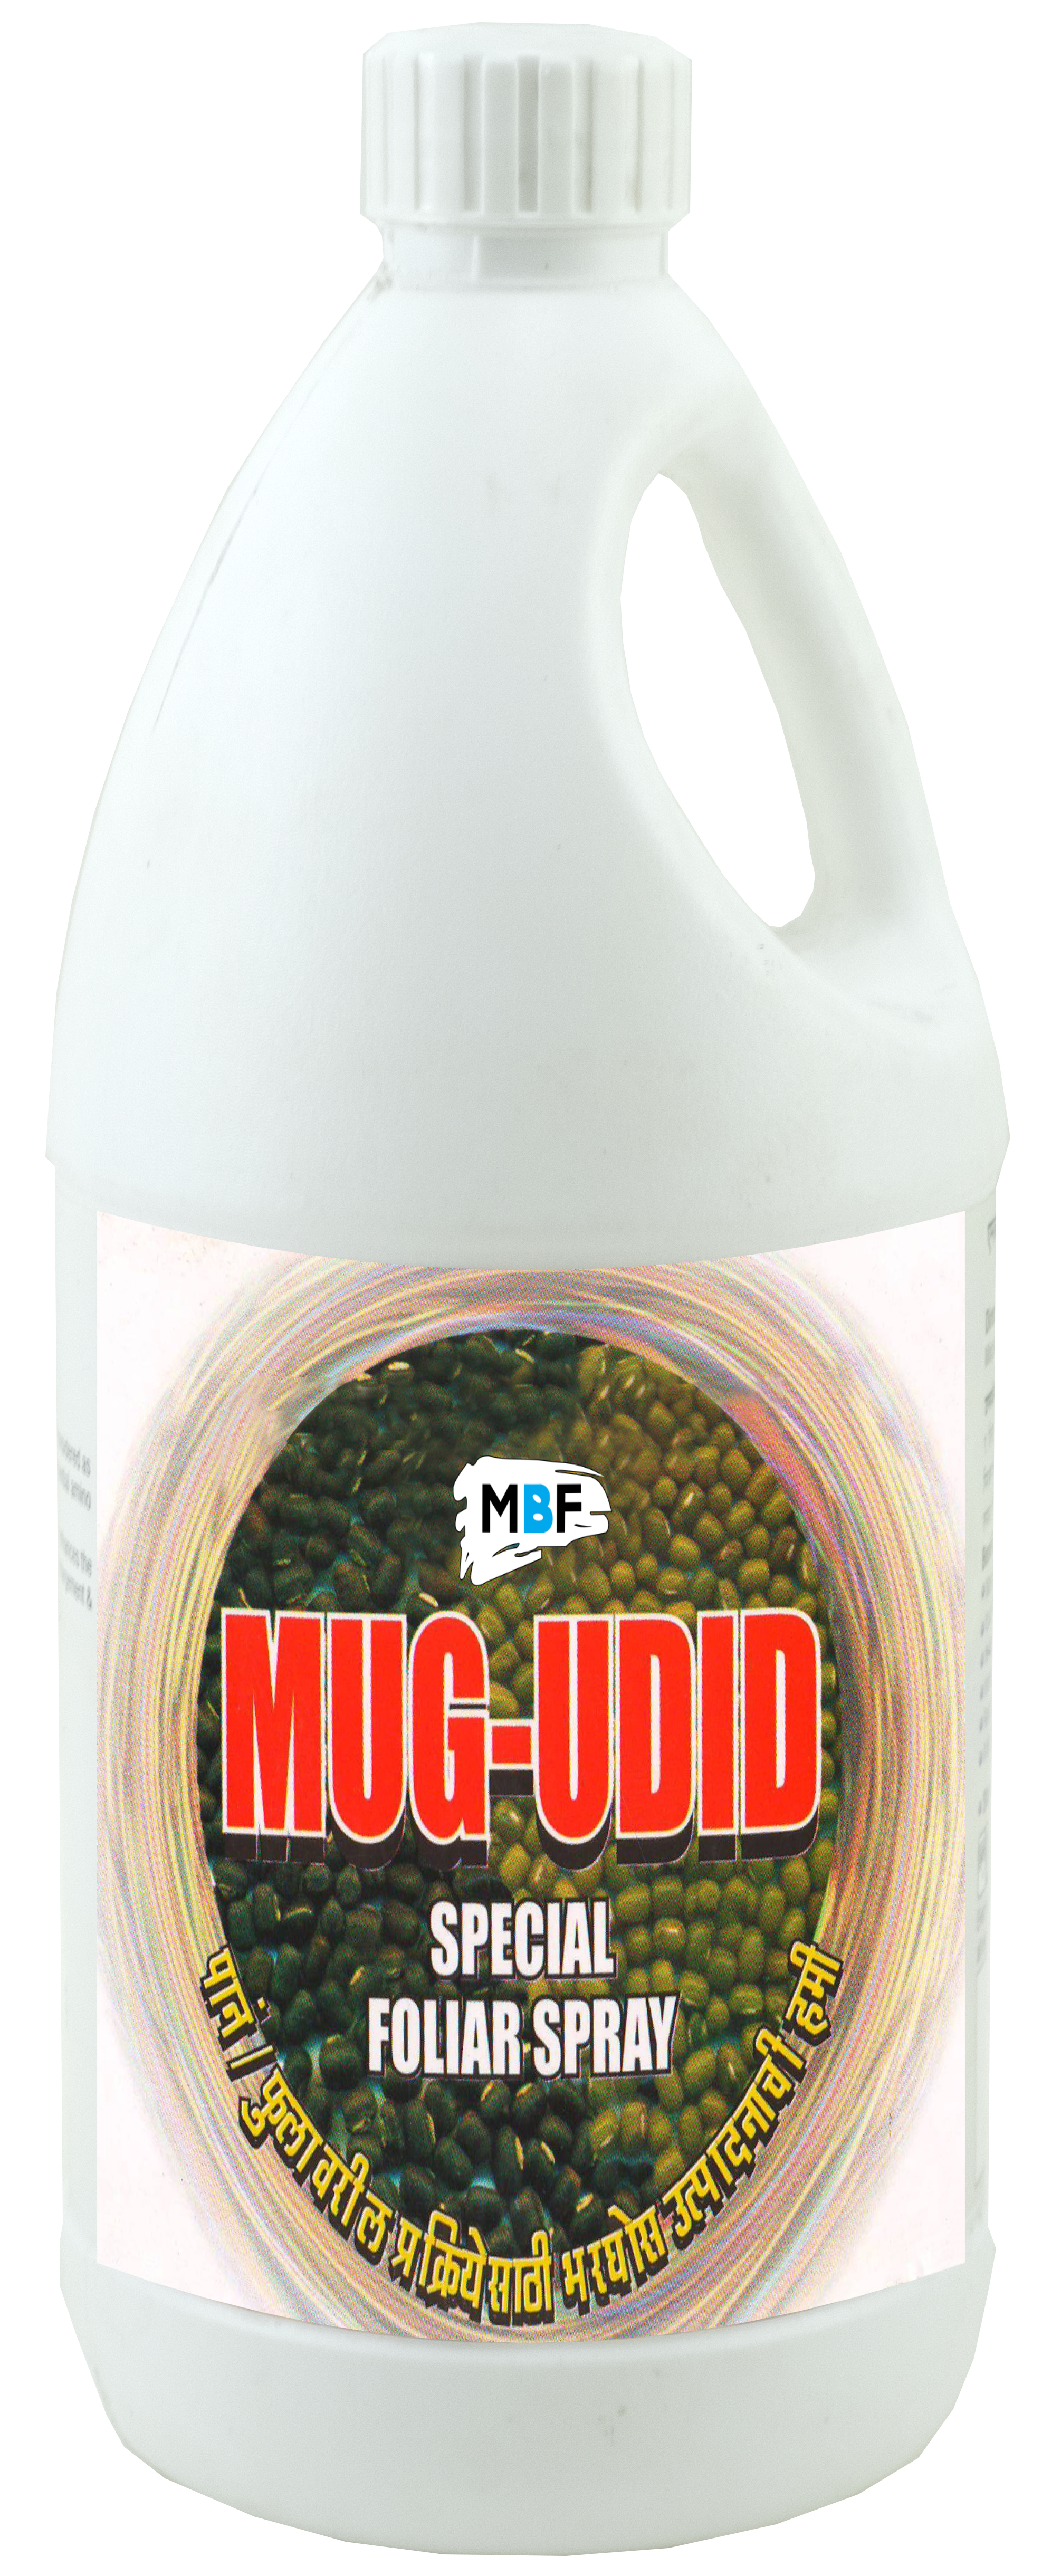 MBF Mug-Udid Special